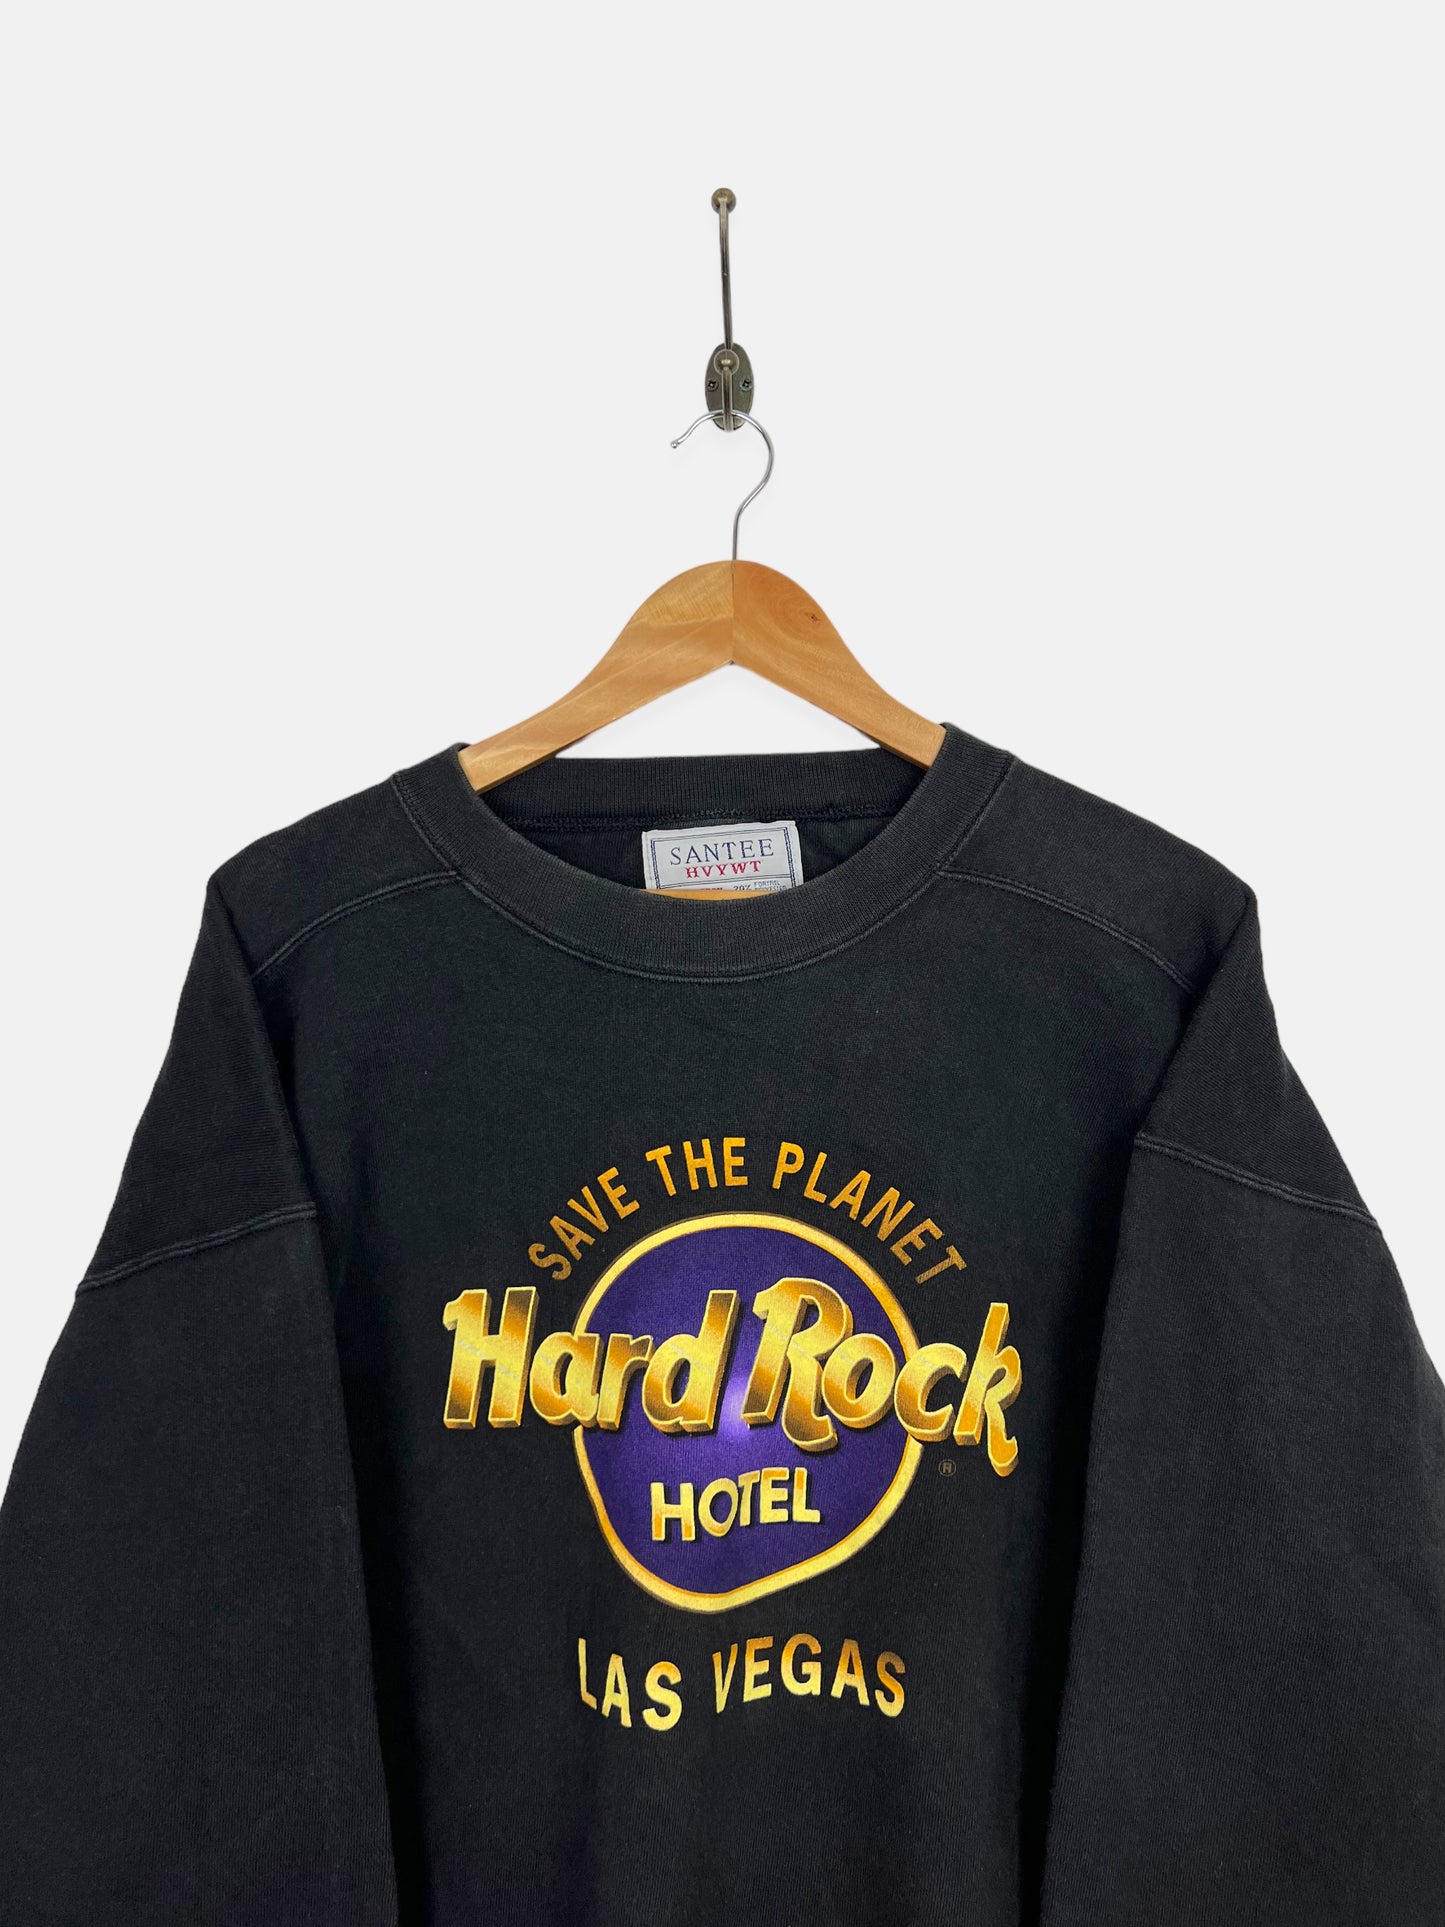 90's Hard Rock Hotel Las Vegas USA Made Vintage Sweatshirt Size L